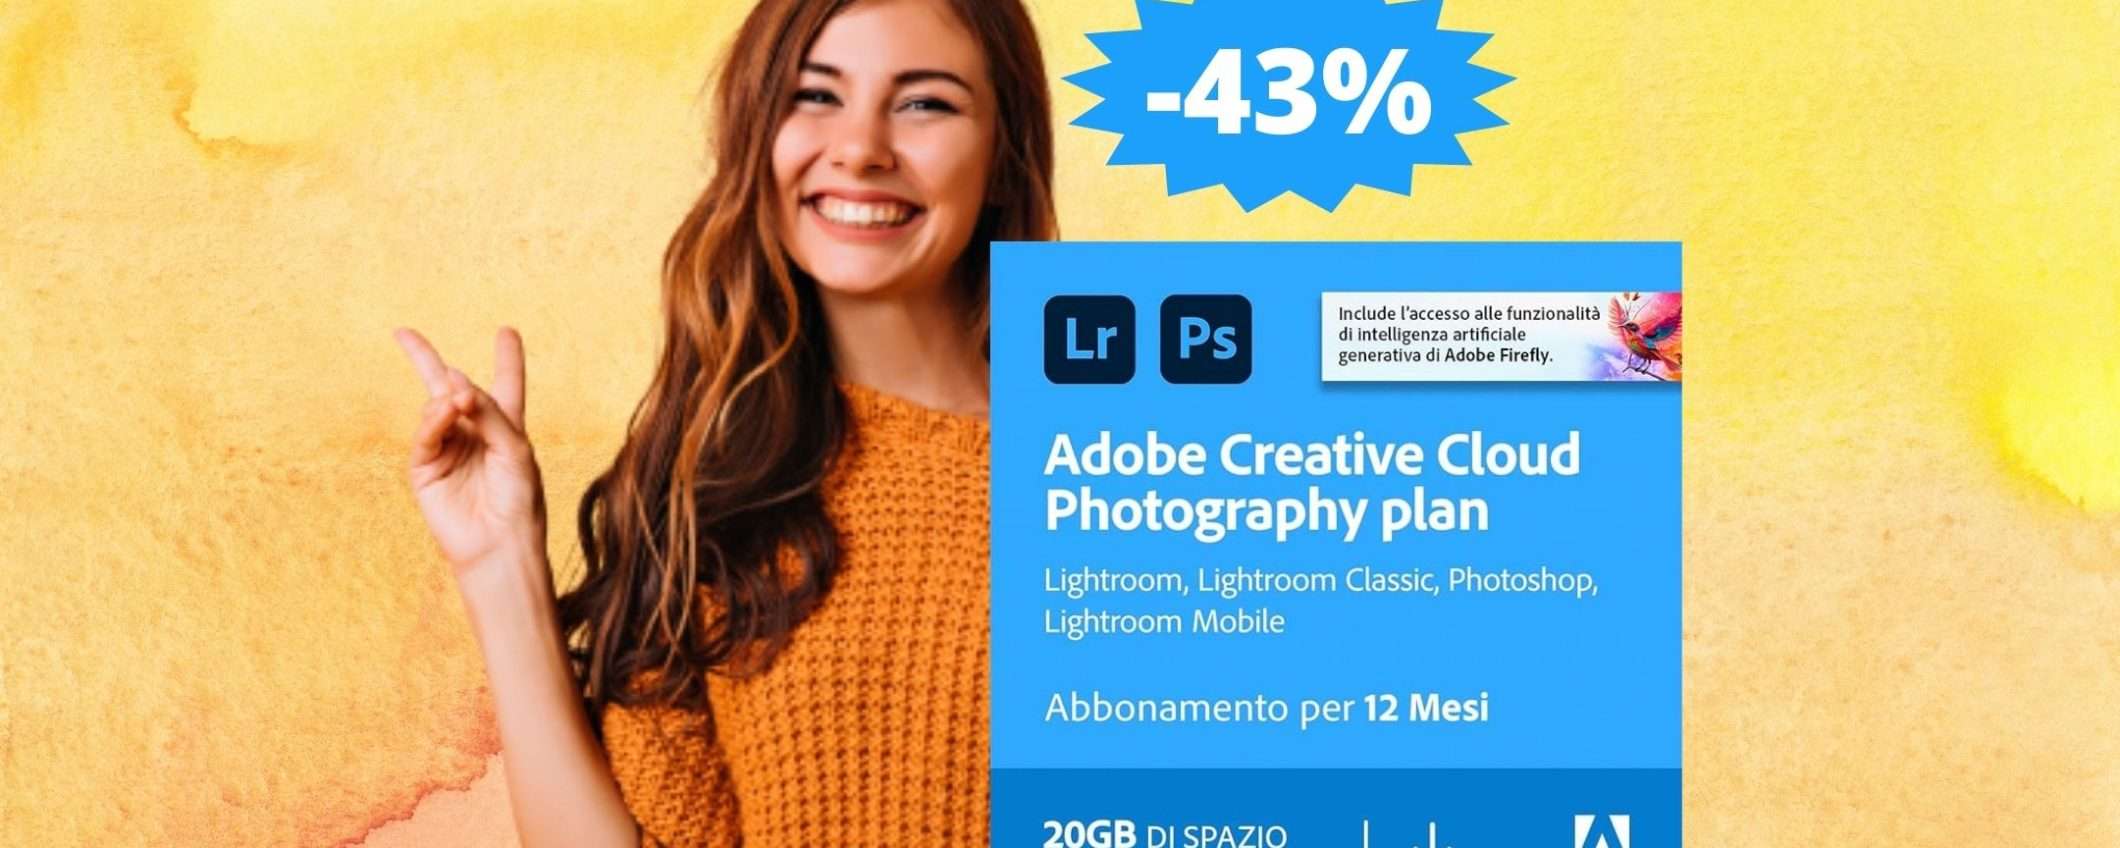 Adobe Creative Cloud Photography Plan: AFAFRE su Amazon